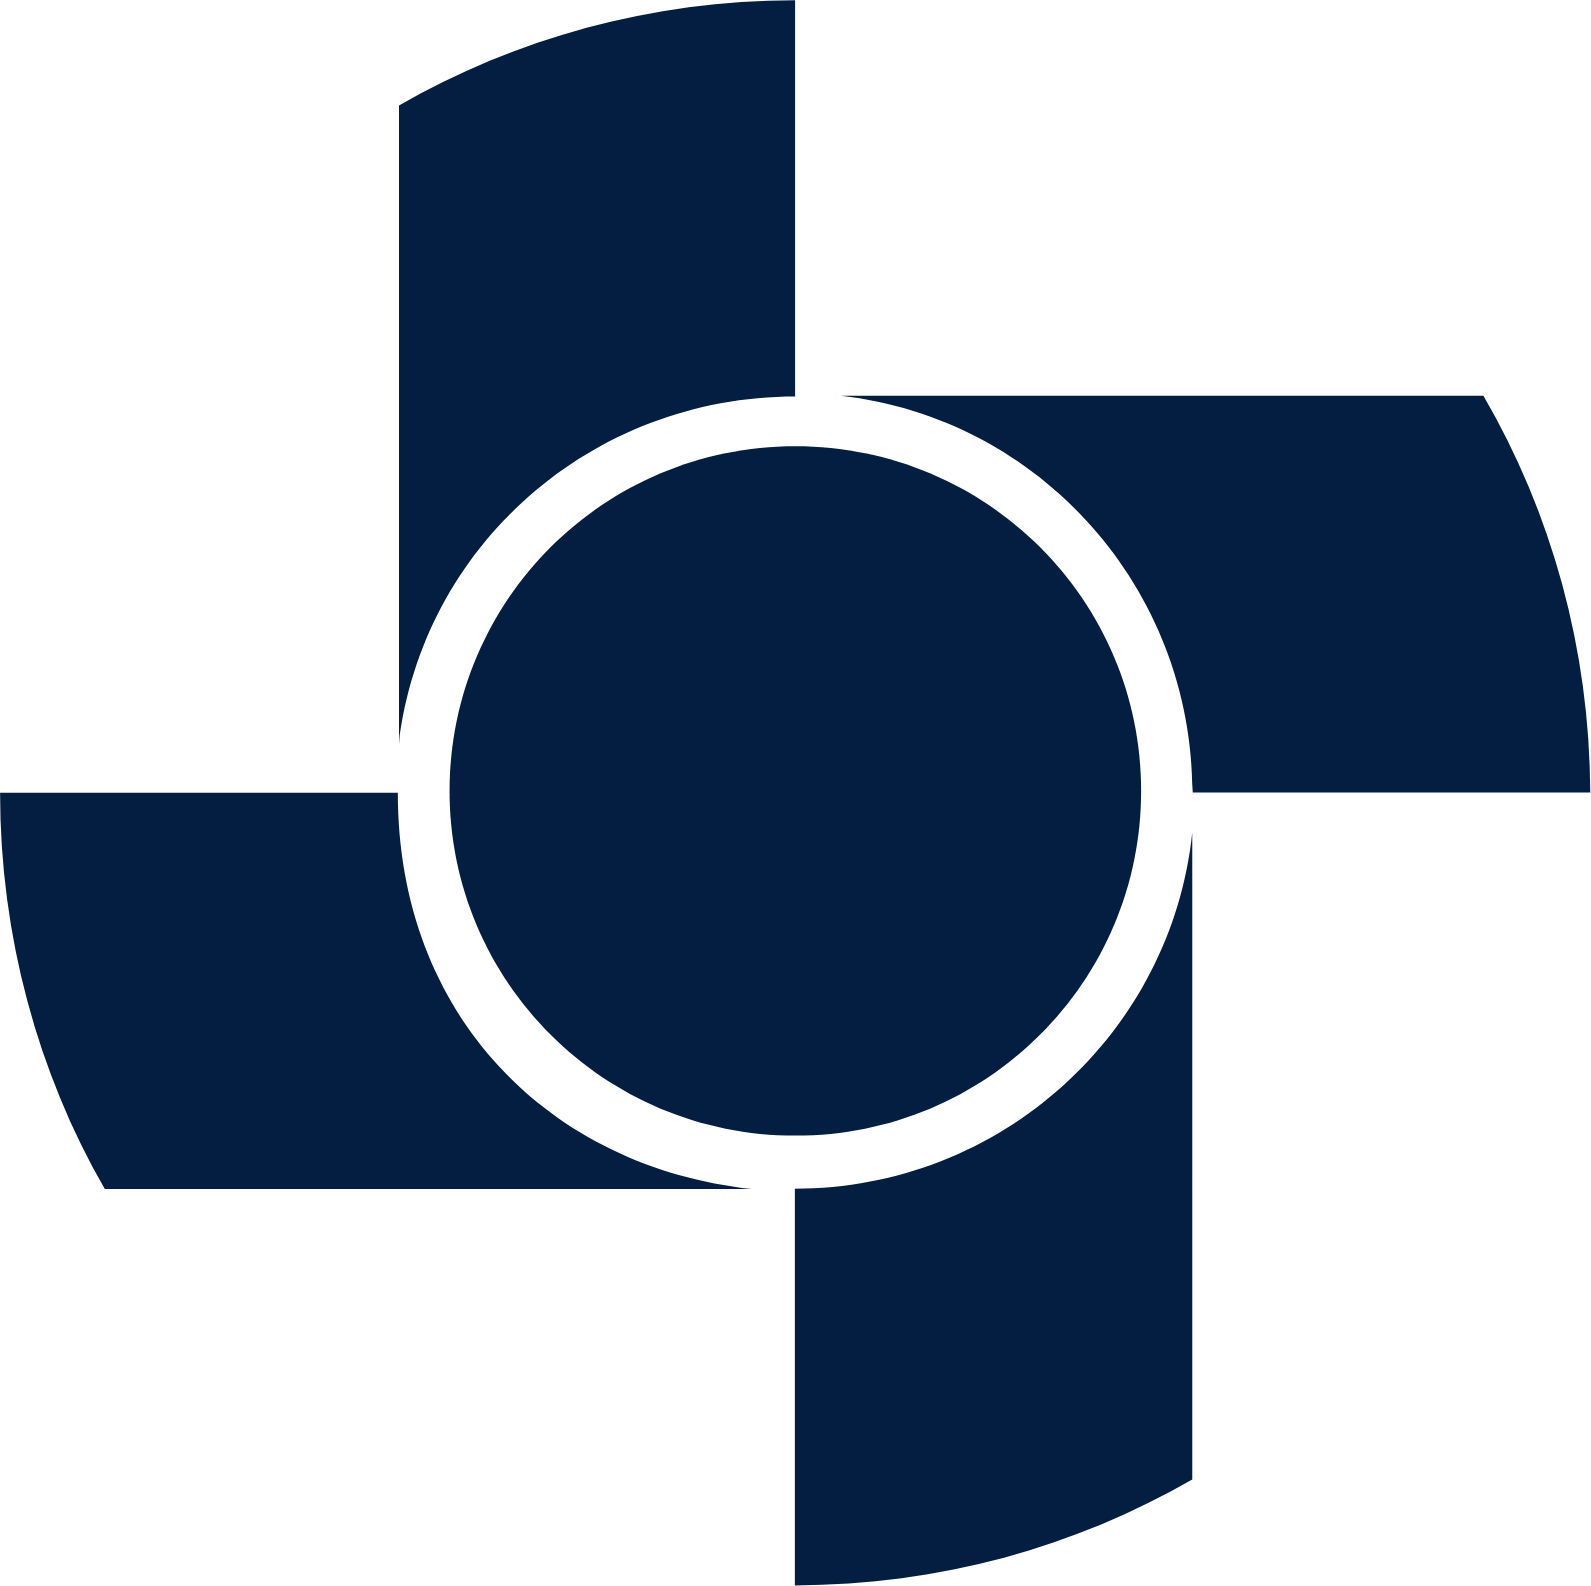 Grupo Financiero Inbursa logo (PNG transparent)